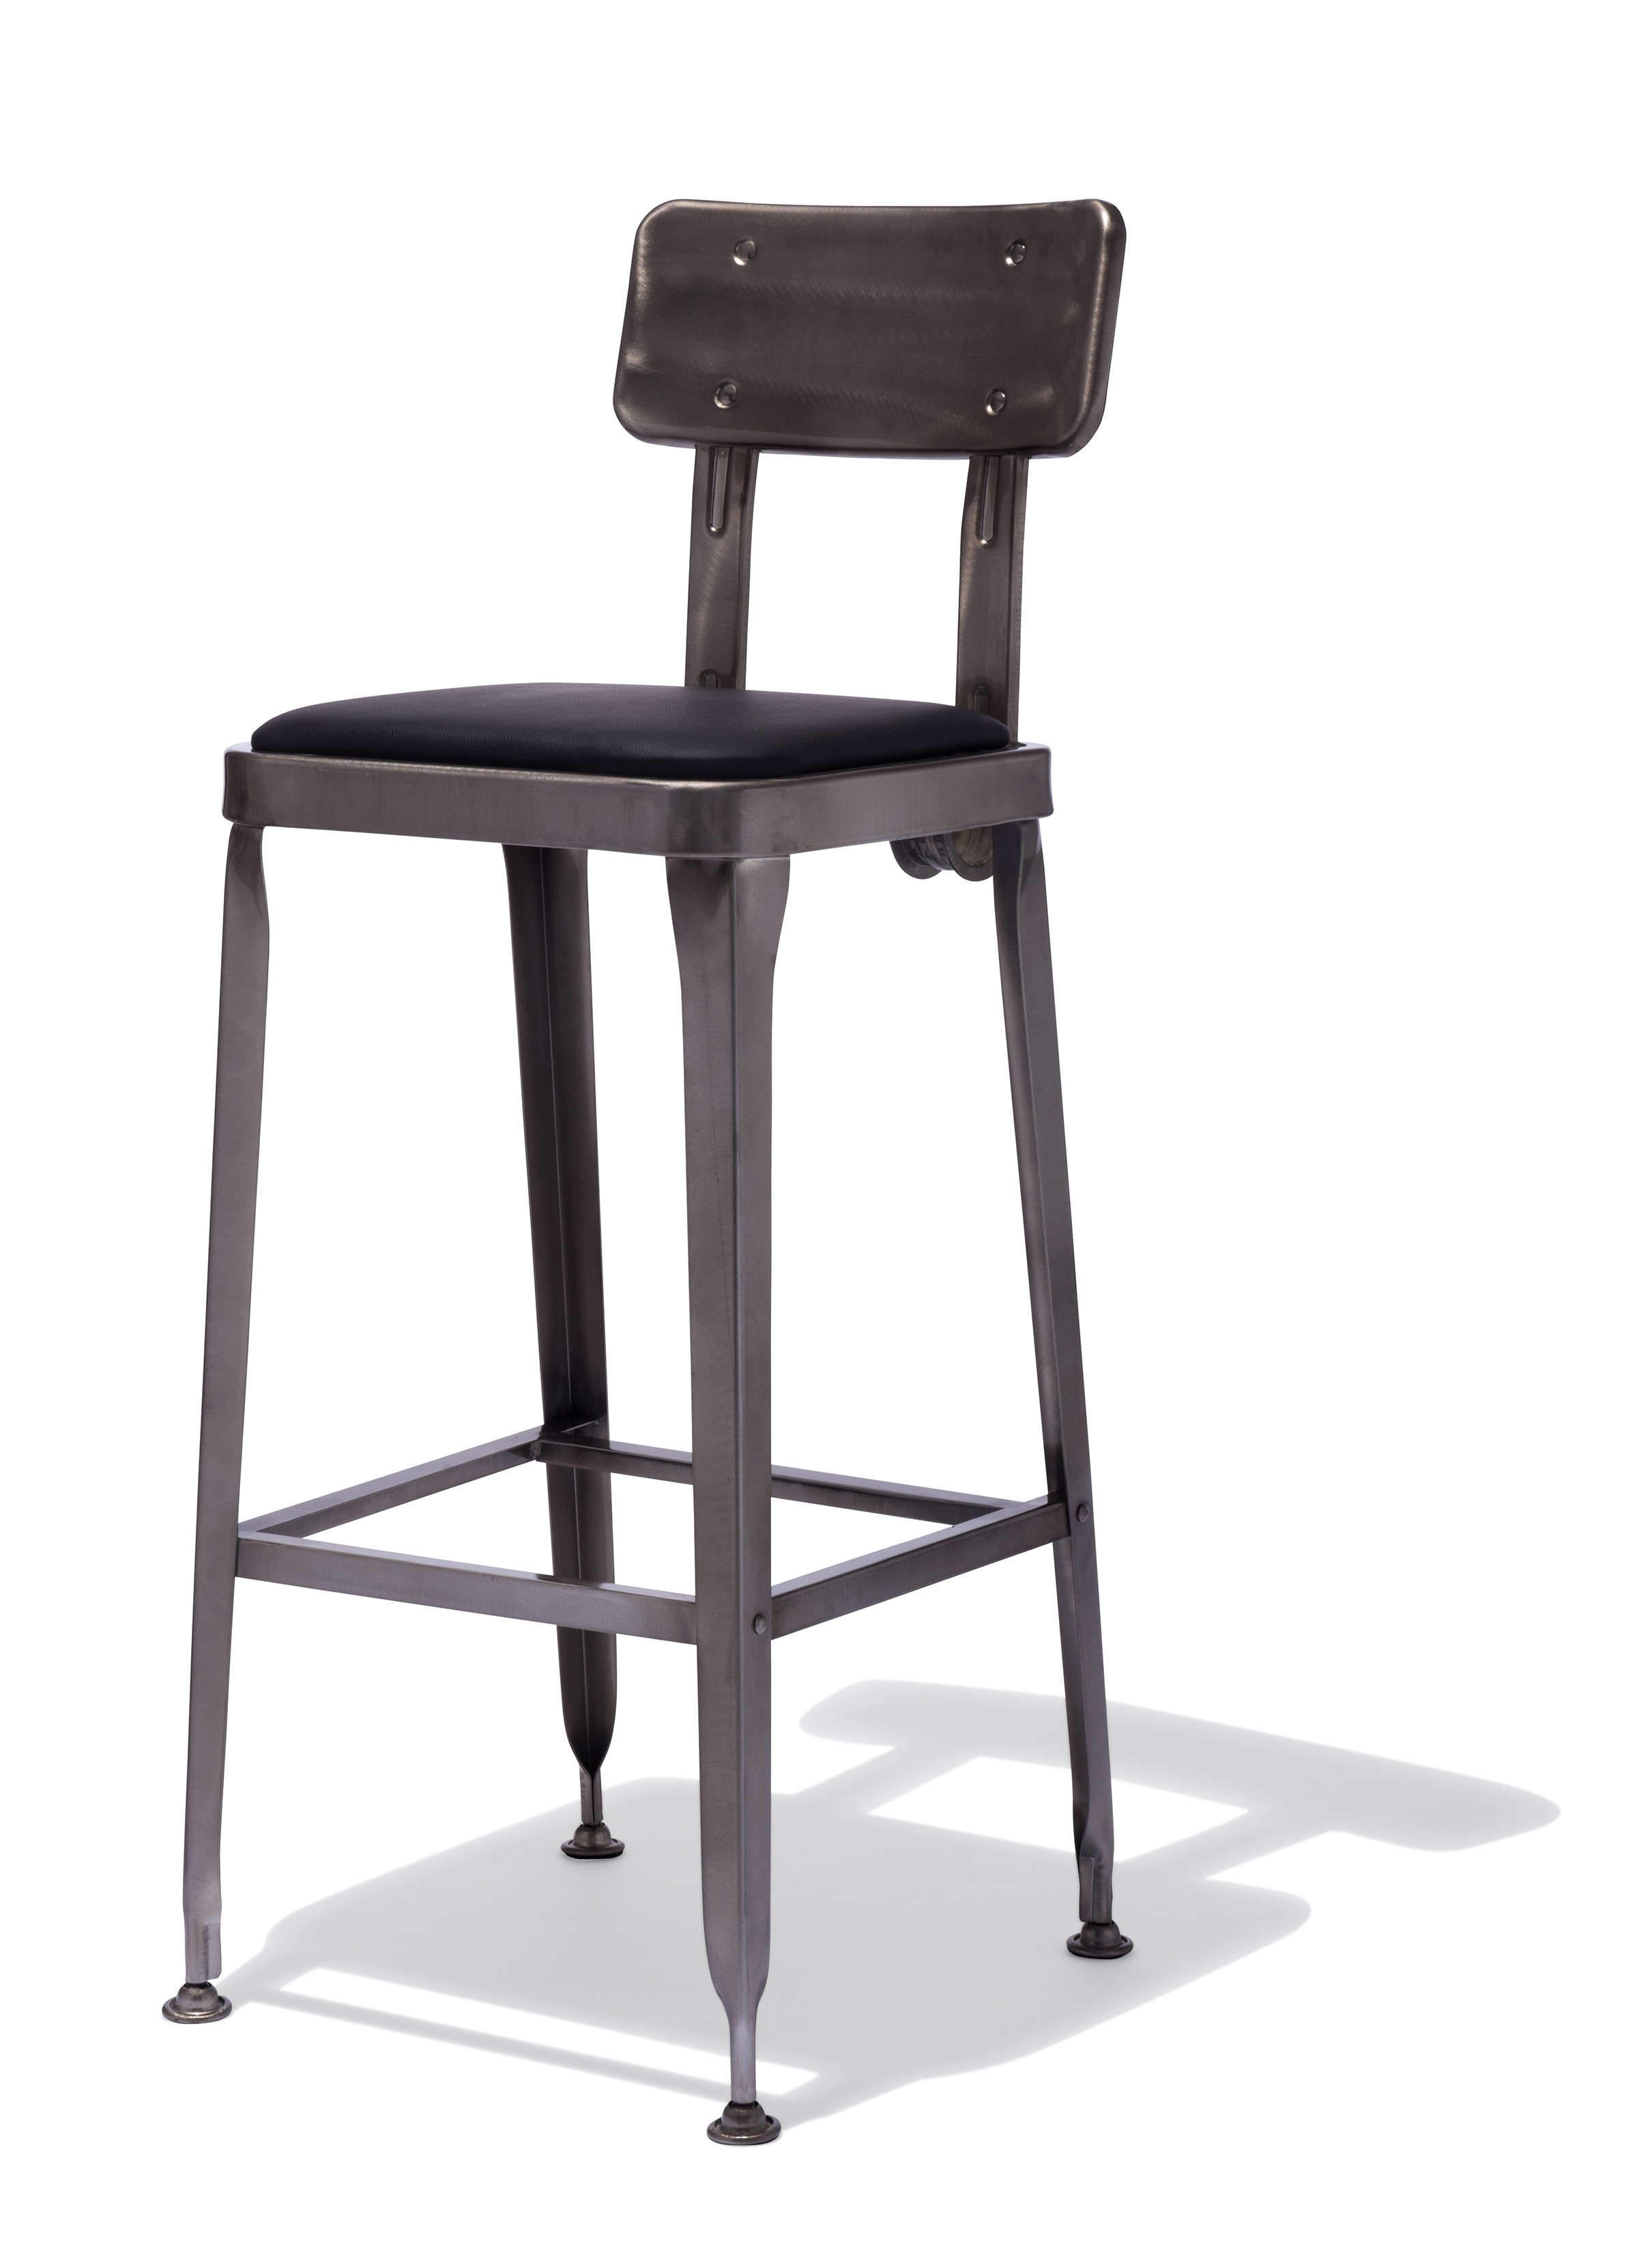 octane bar stool